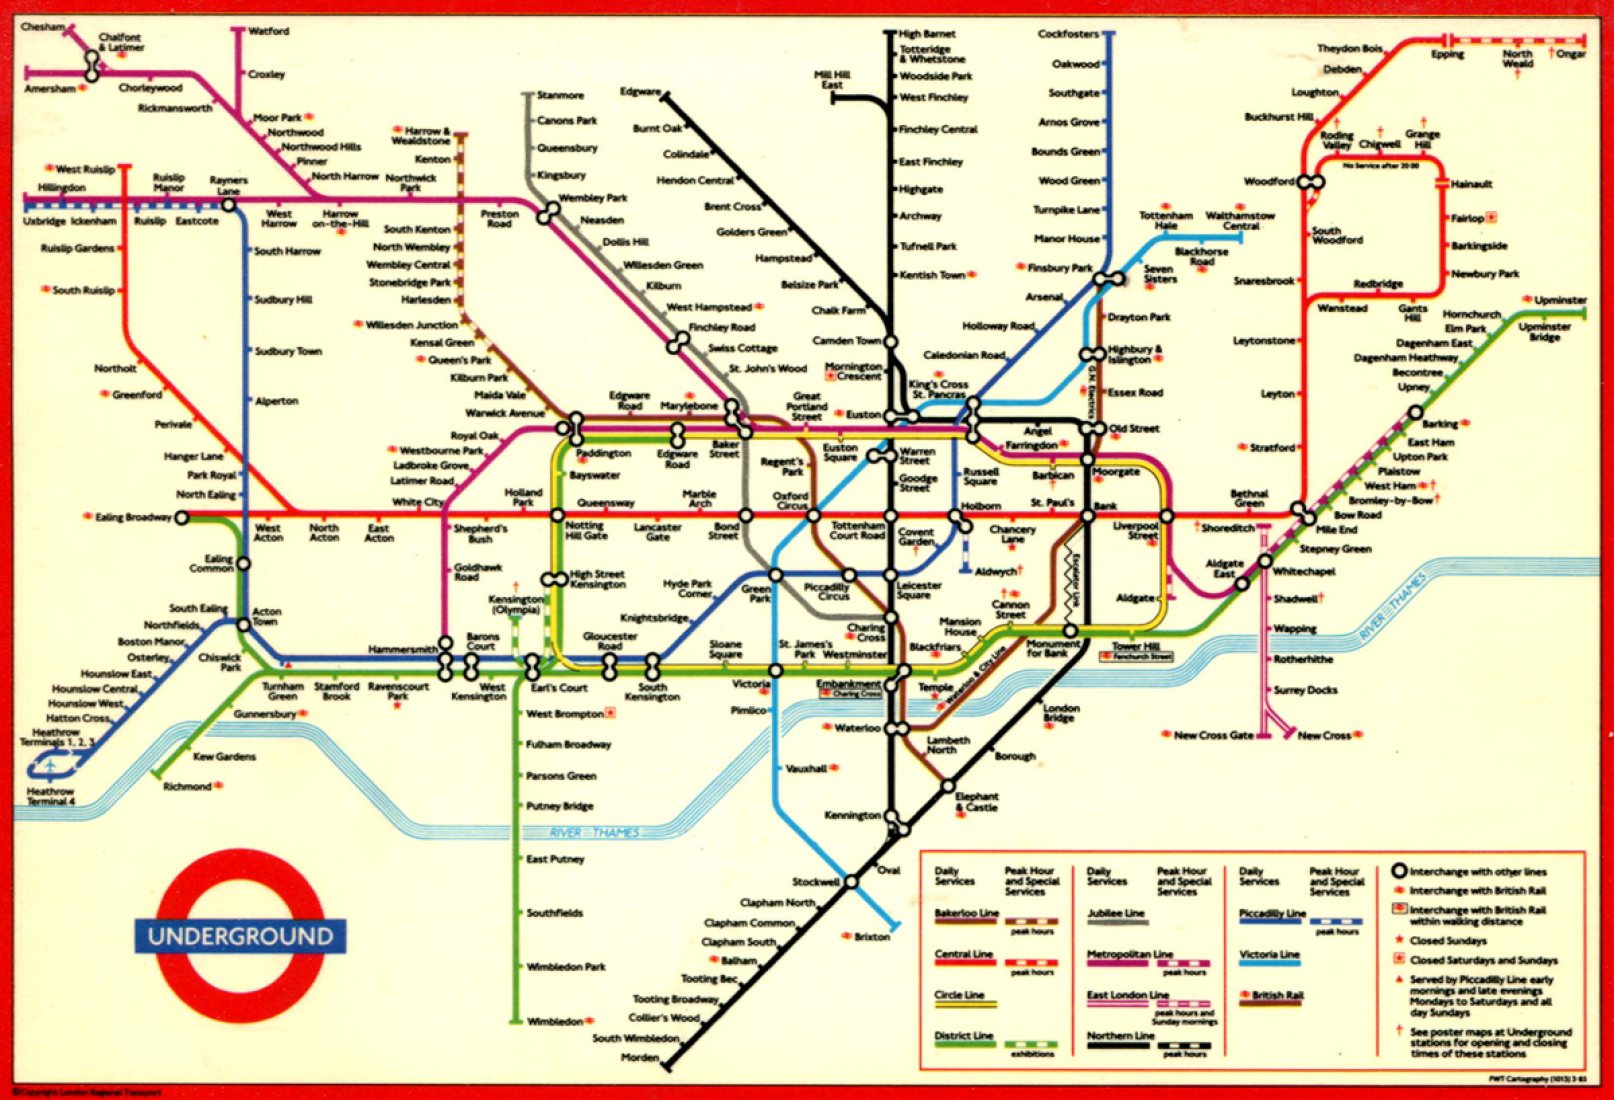 London Tube Map London Underground Map World Maps | Images and Photos ...